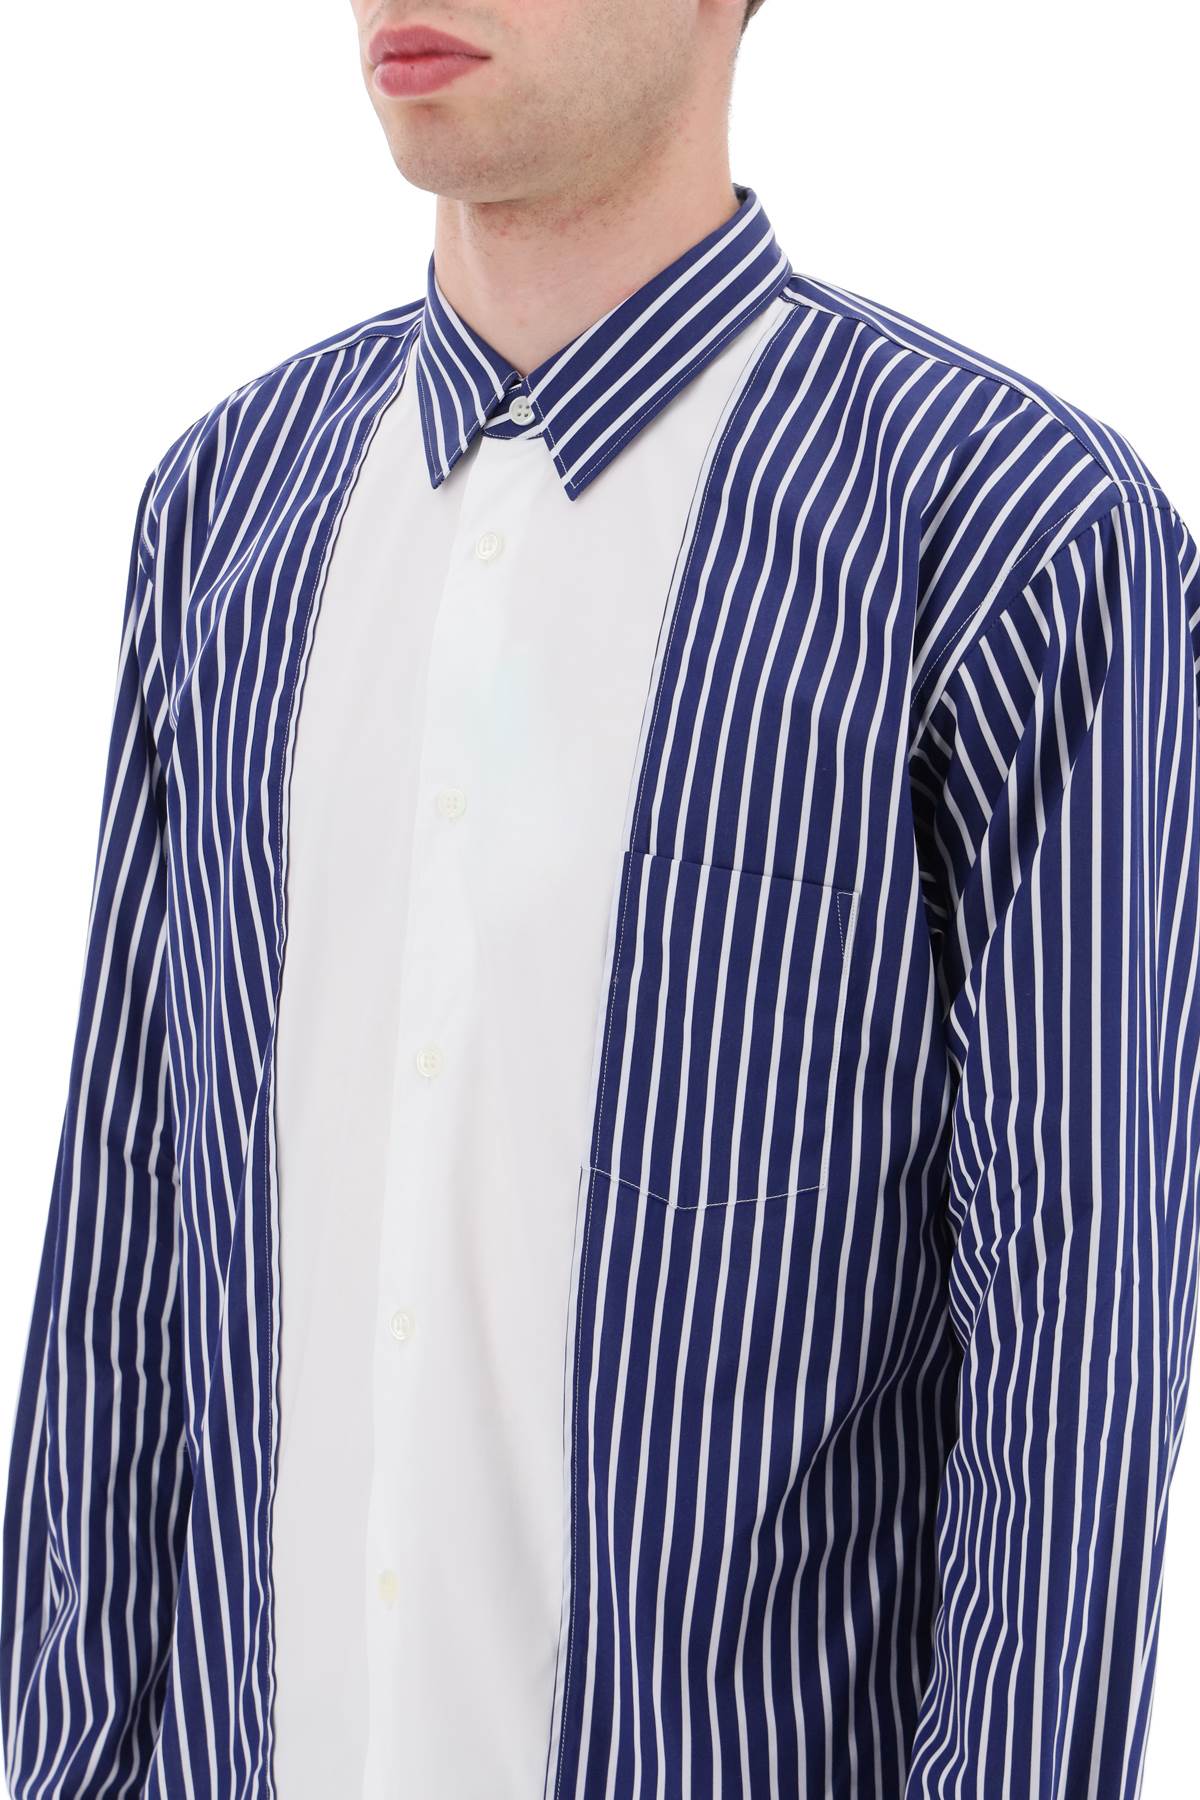 Comme Des Garcons Shirt Comme des garcons shirt striped cotton shirt